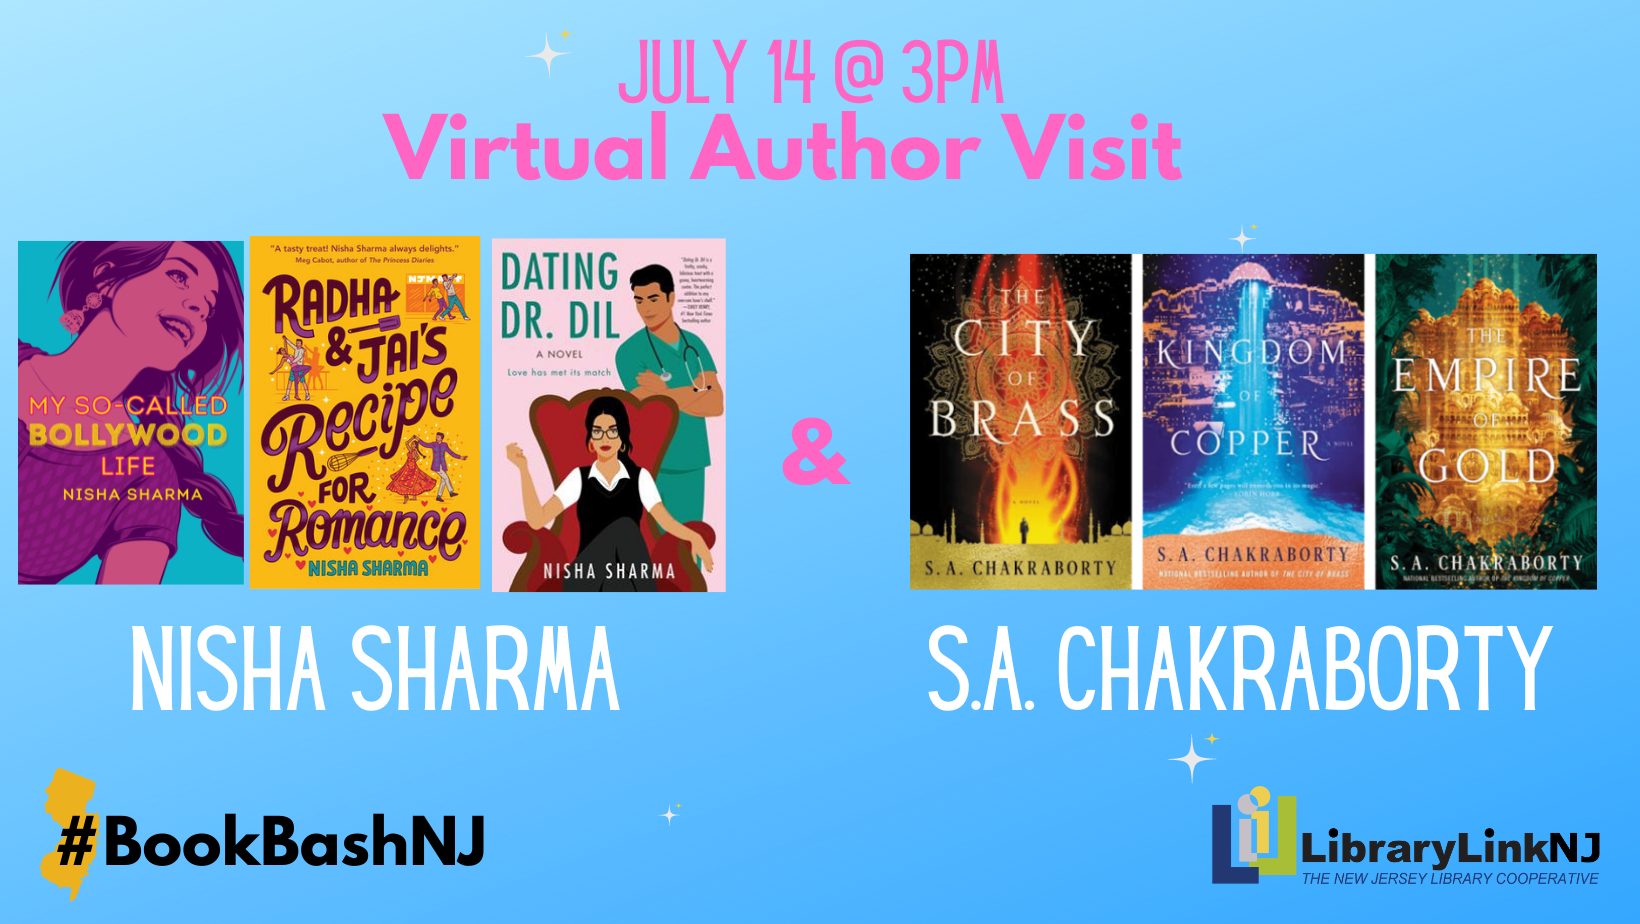 Virtual Author Visit with Nisha Sharma and S.A. Chakraborty